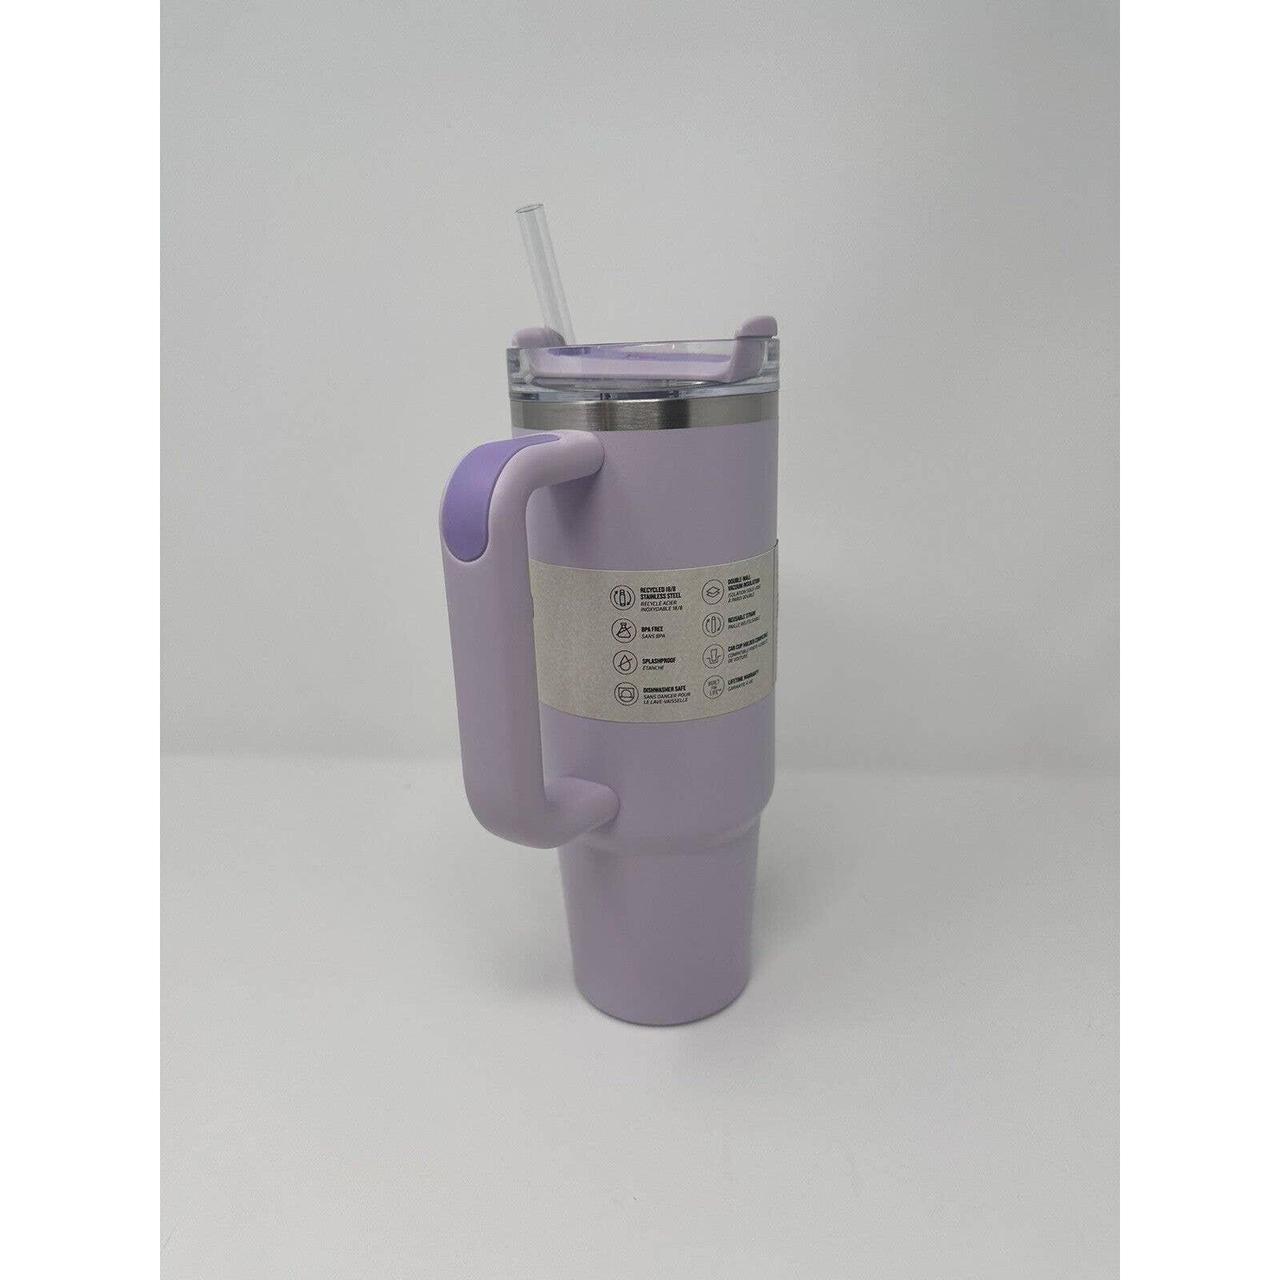 Light purple 30 oz Stanley tumbler cup. Was used - Depop